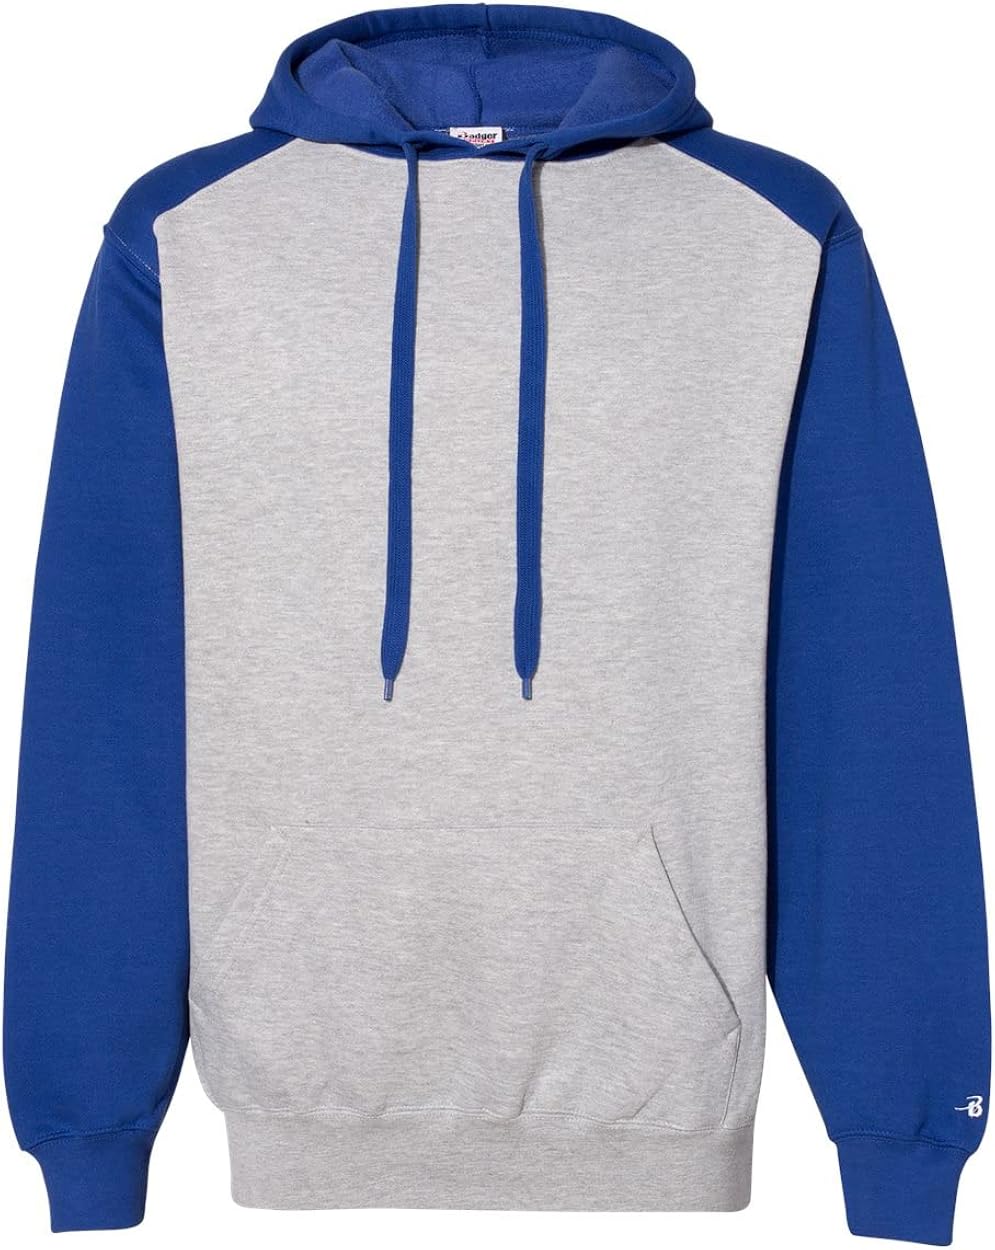 Mens Sport Athletic Fleece Hooded Sweatshirt 1249 -OxfordRoy -L